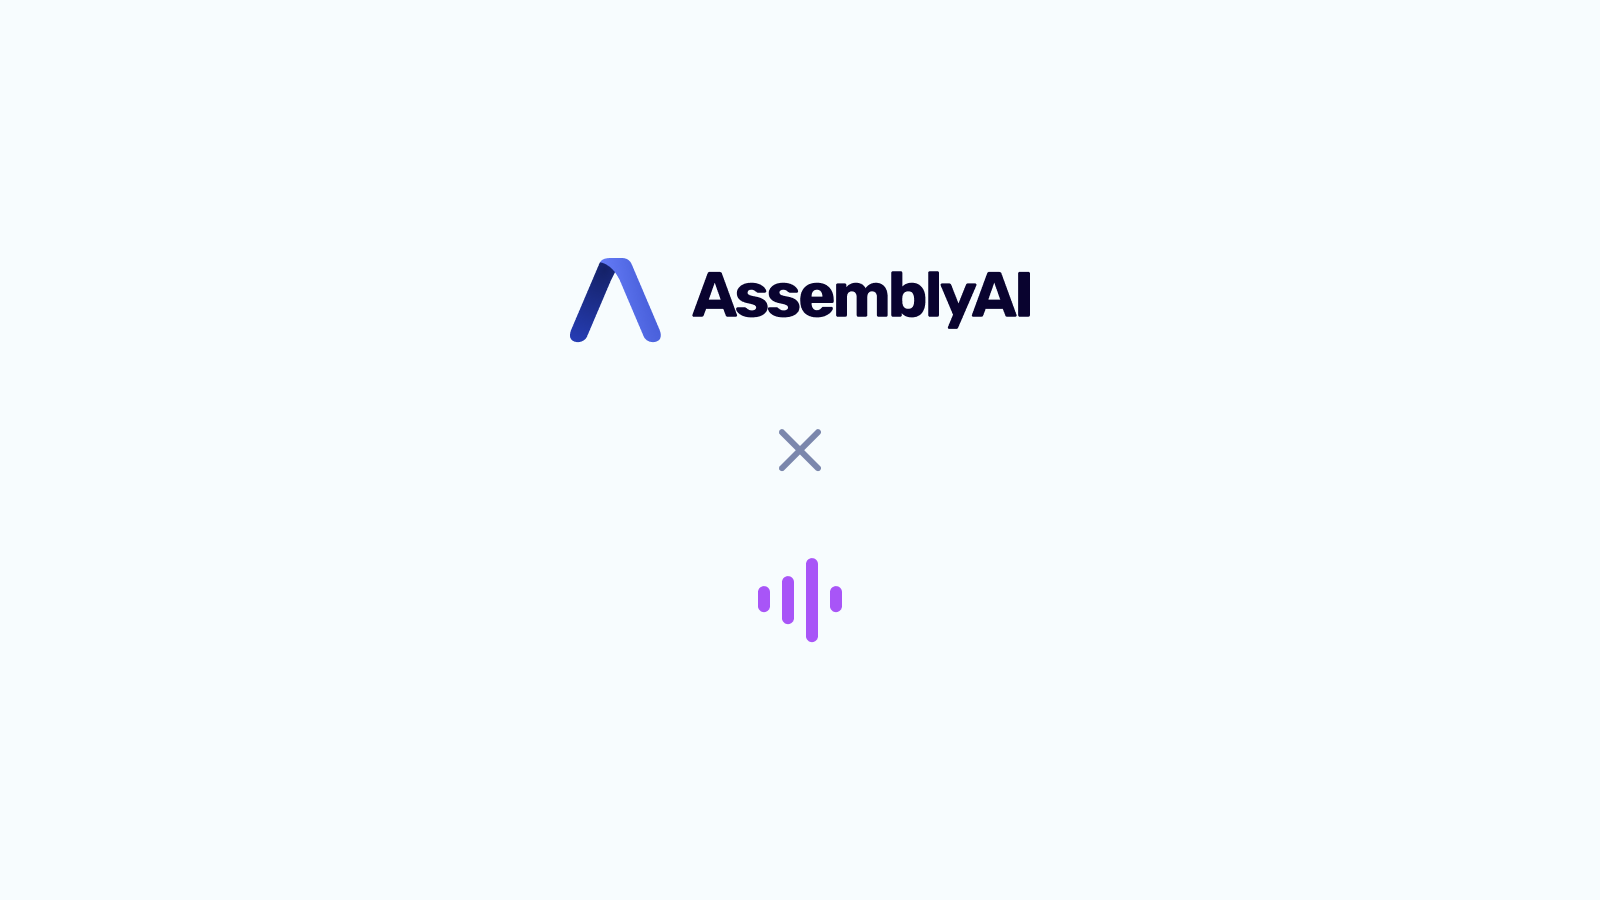 Built with AssemblyAI - YouTube Transcripts